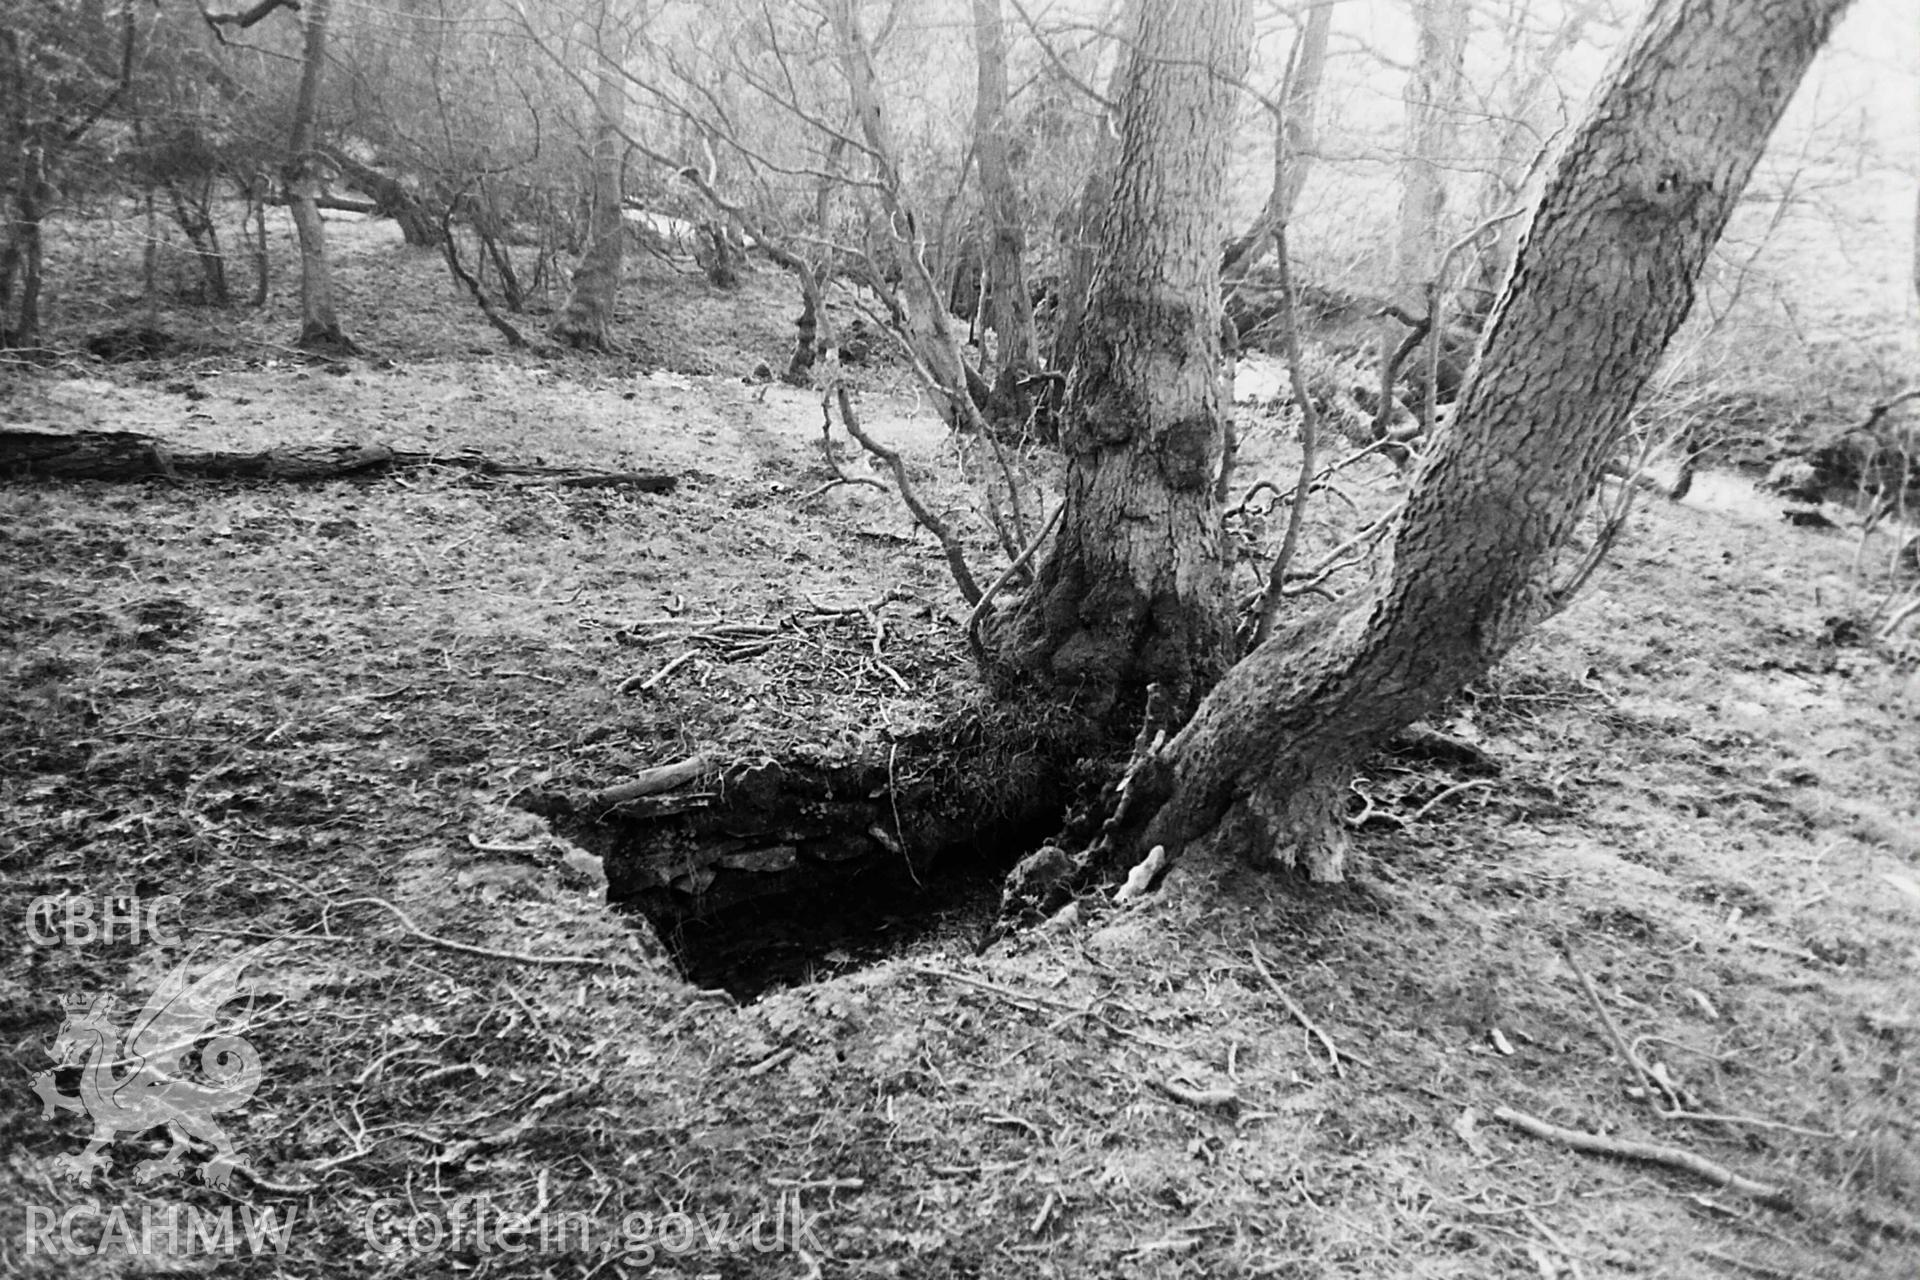 Black and white photo showing Llandegla Well, taken by Paul R. Davis, undated.